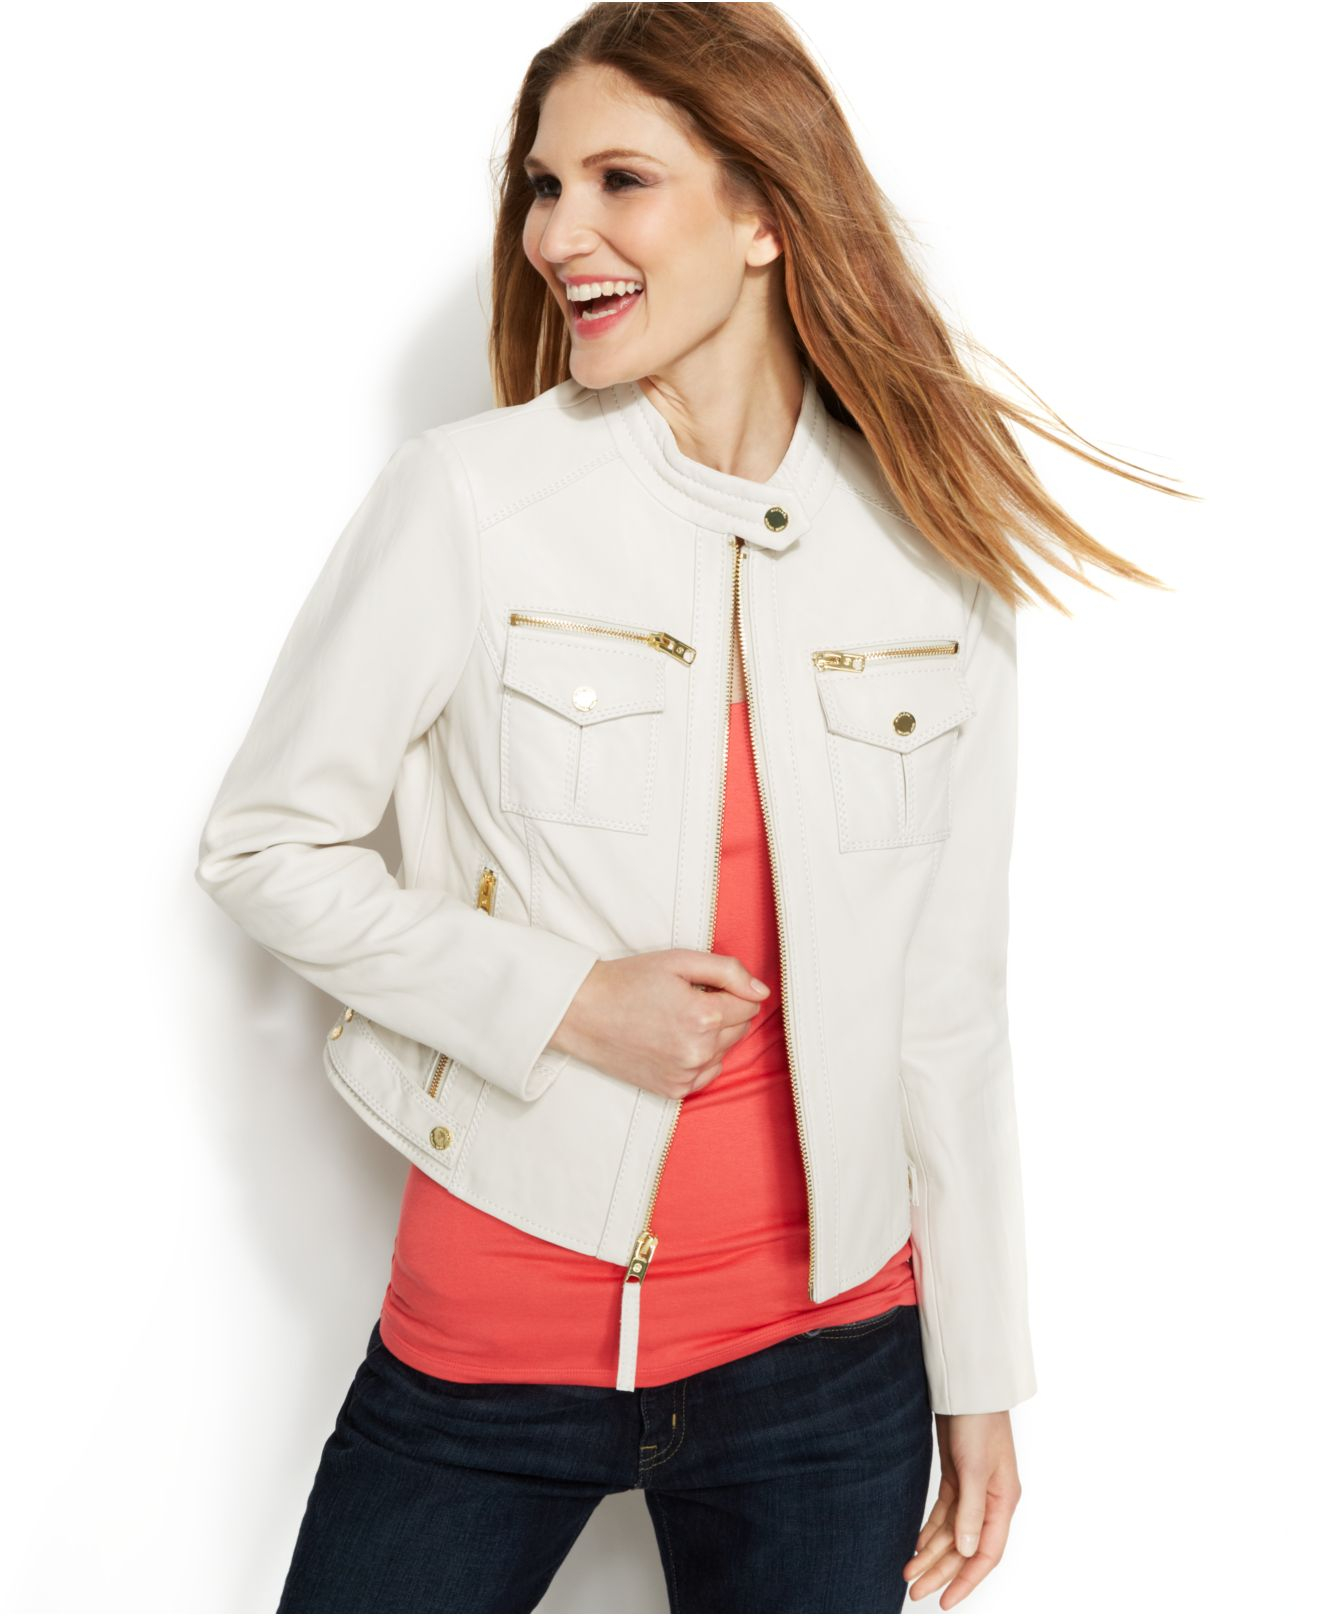 michael kors white leather jacket